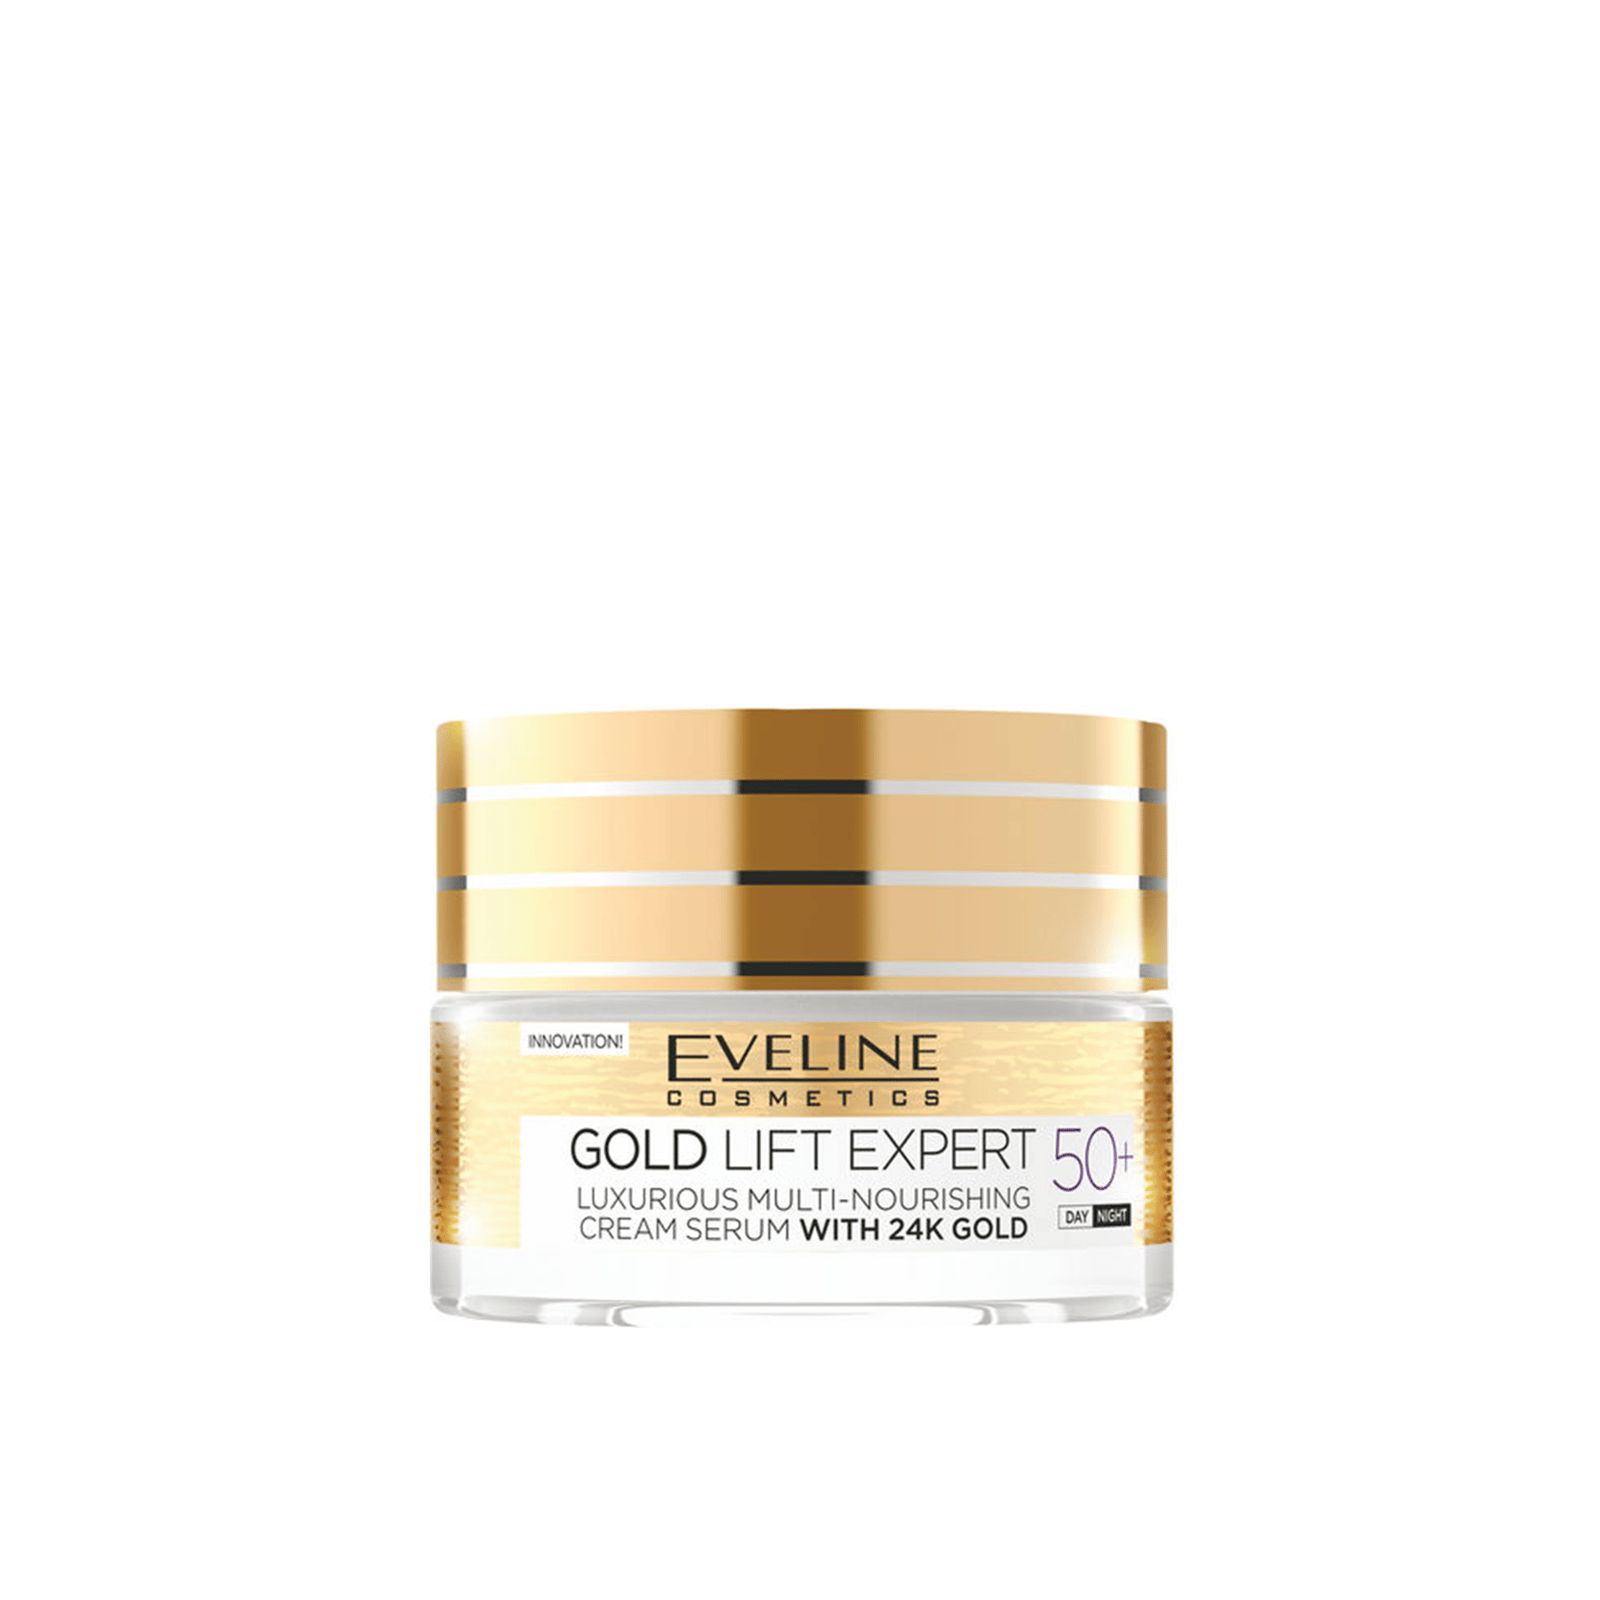 Eveline Cosmetics Gold Lift Expert 50+ Luxurious Multi-Nourishing Cream Serum 50ml (1.76 fl oz)